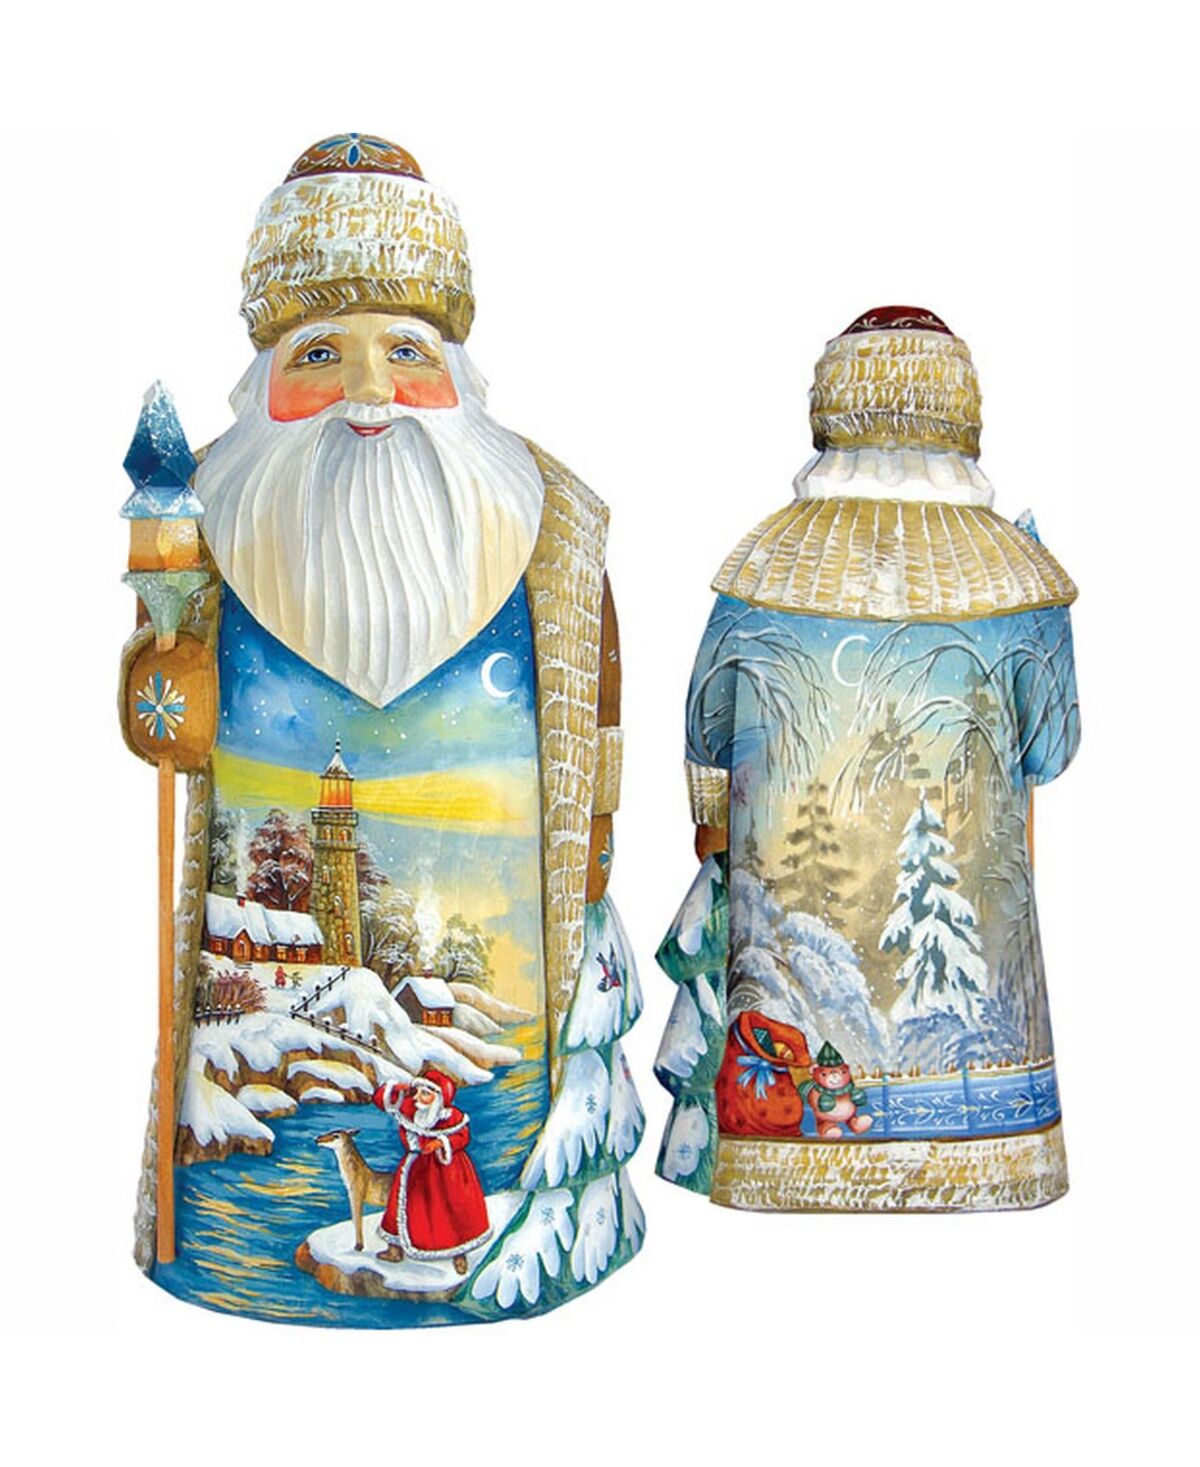 G.DeBrekht Woodcarved Winter Santa Figurine - Multi